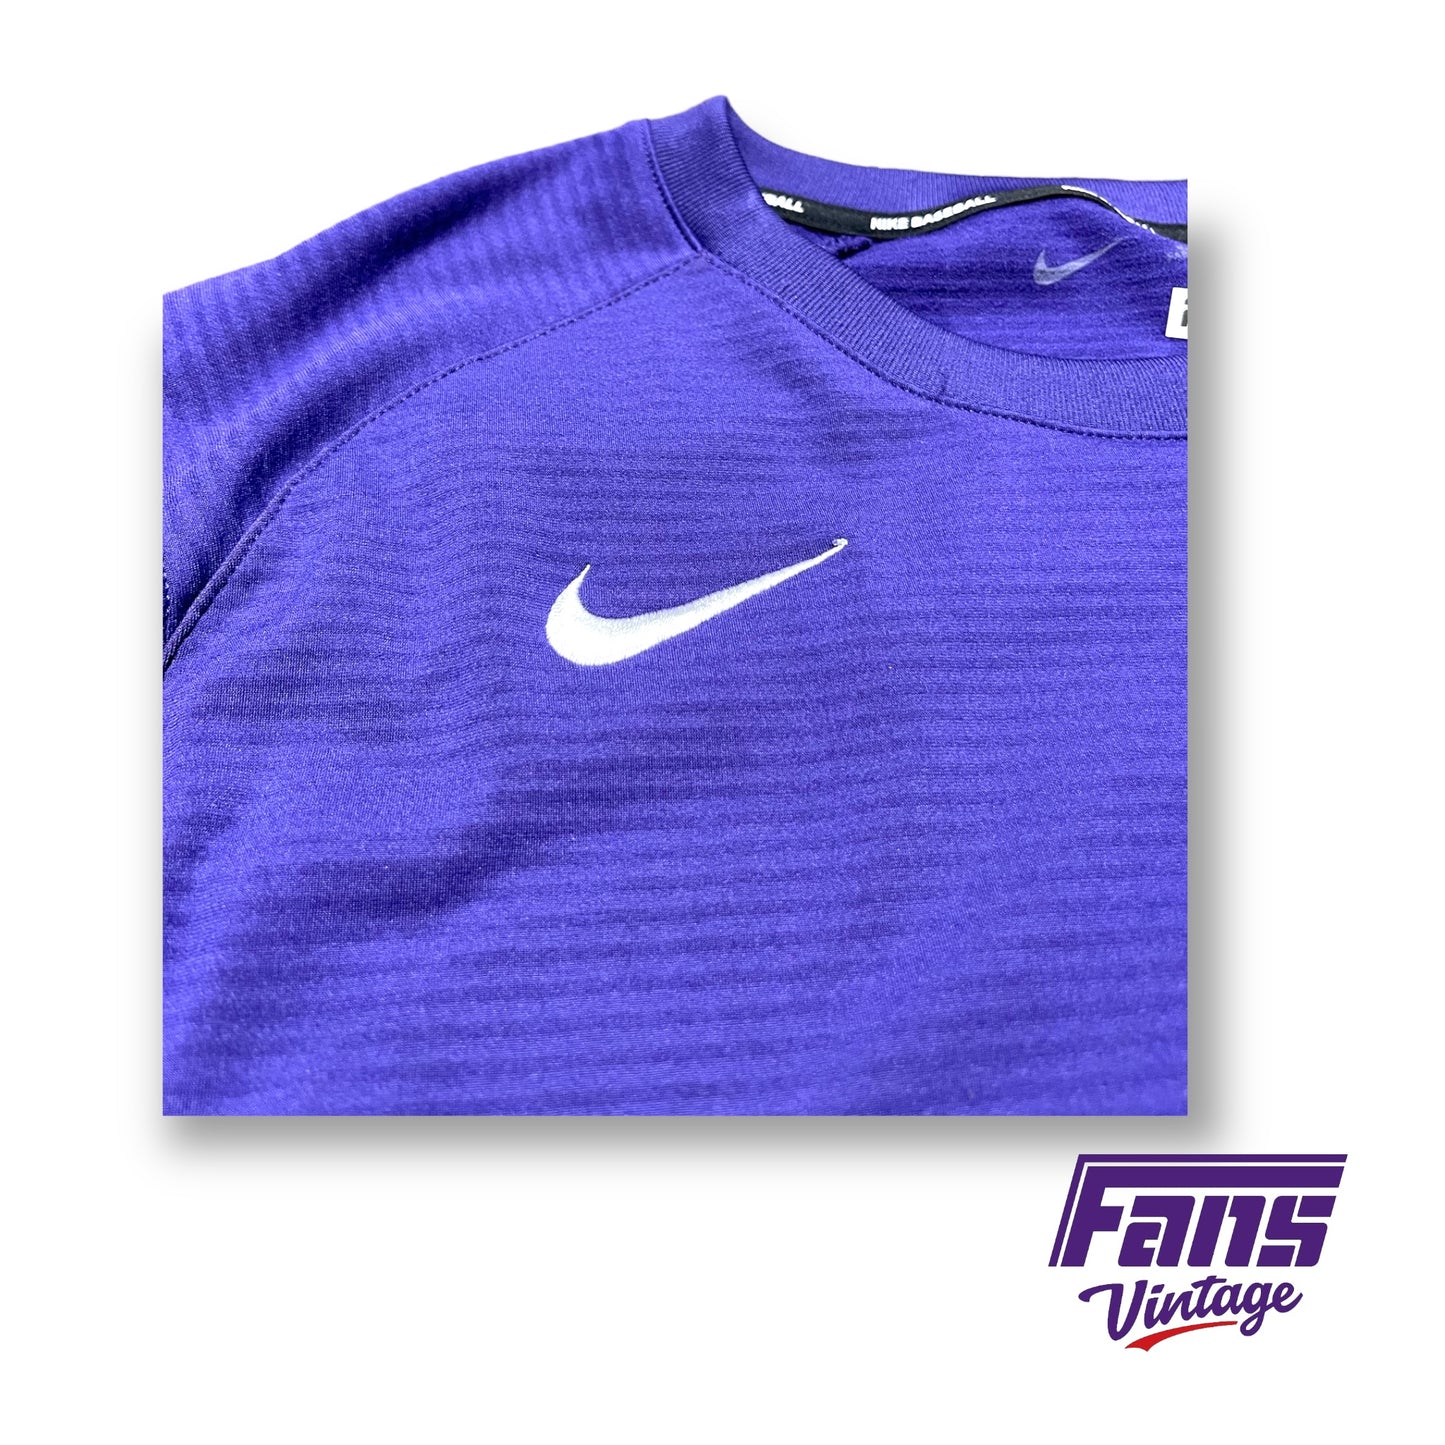 Nike Baseball TCU Team Issued Premium training shirt - Purple Long Sleeve with awesome weave pattern!